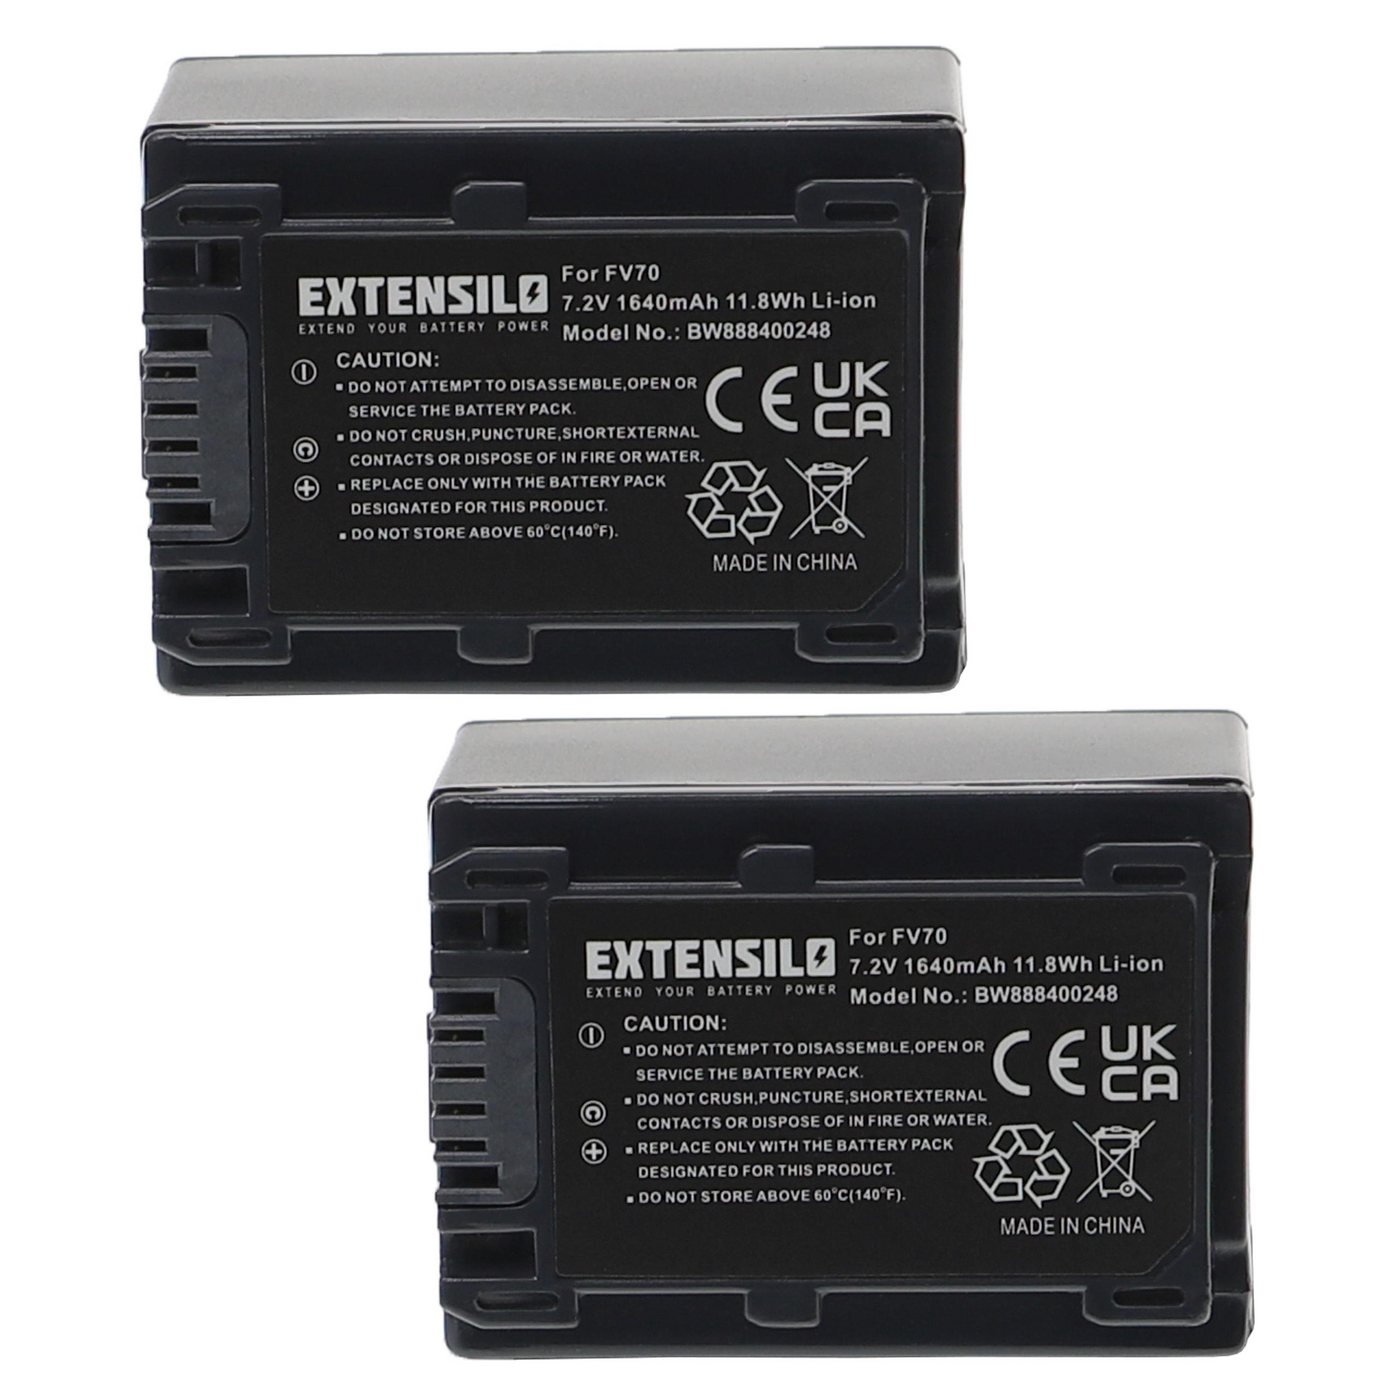 Extensilo passend für Sony DCR-HC26E, DCR-HC28E, DCR-HC22E, DCR-HC23E, DCR-HC24E, DCR-HC27E, DCR-HC30E Kamera / Foto DSLR / Camcorder Analog / Camcorder Digital (1640mAh, 7,2V, Li-Ion) Kamera-Akku 1640 mAh von Extensilo